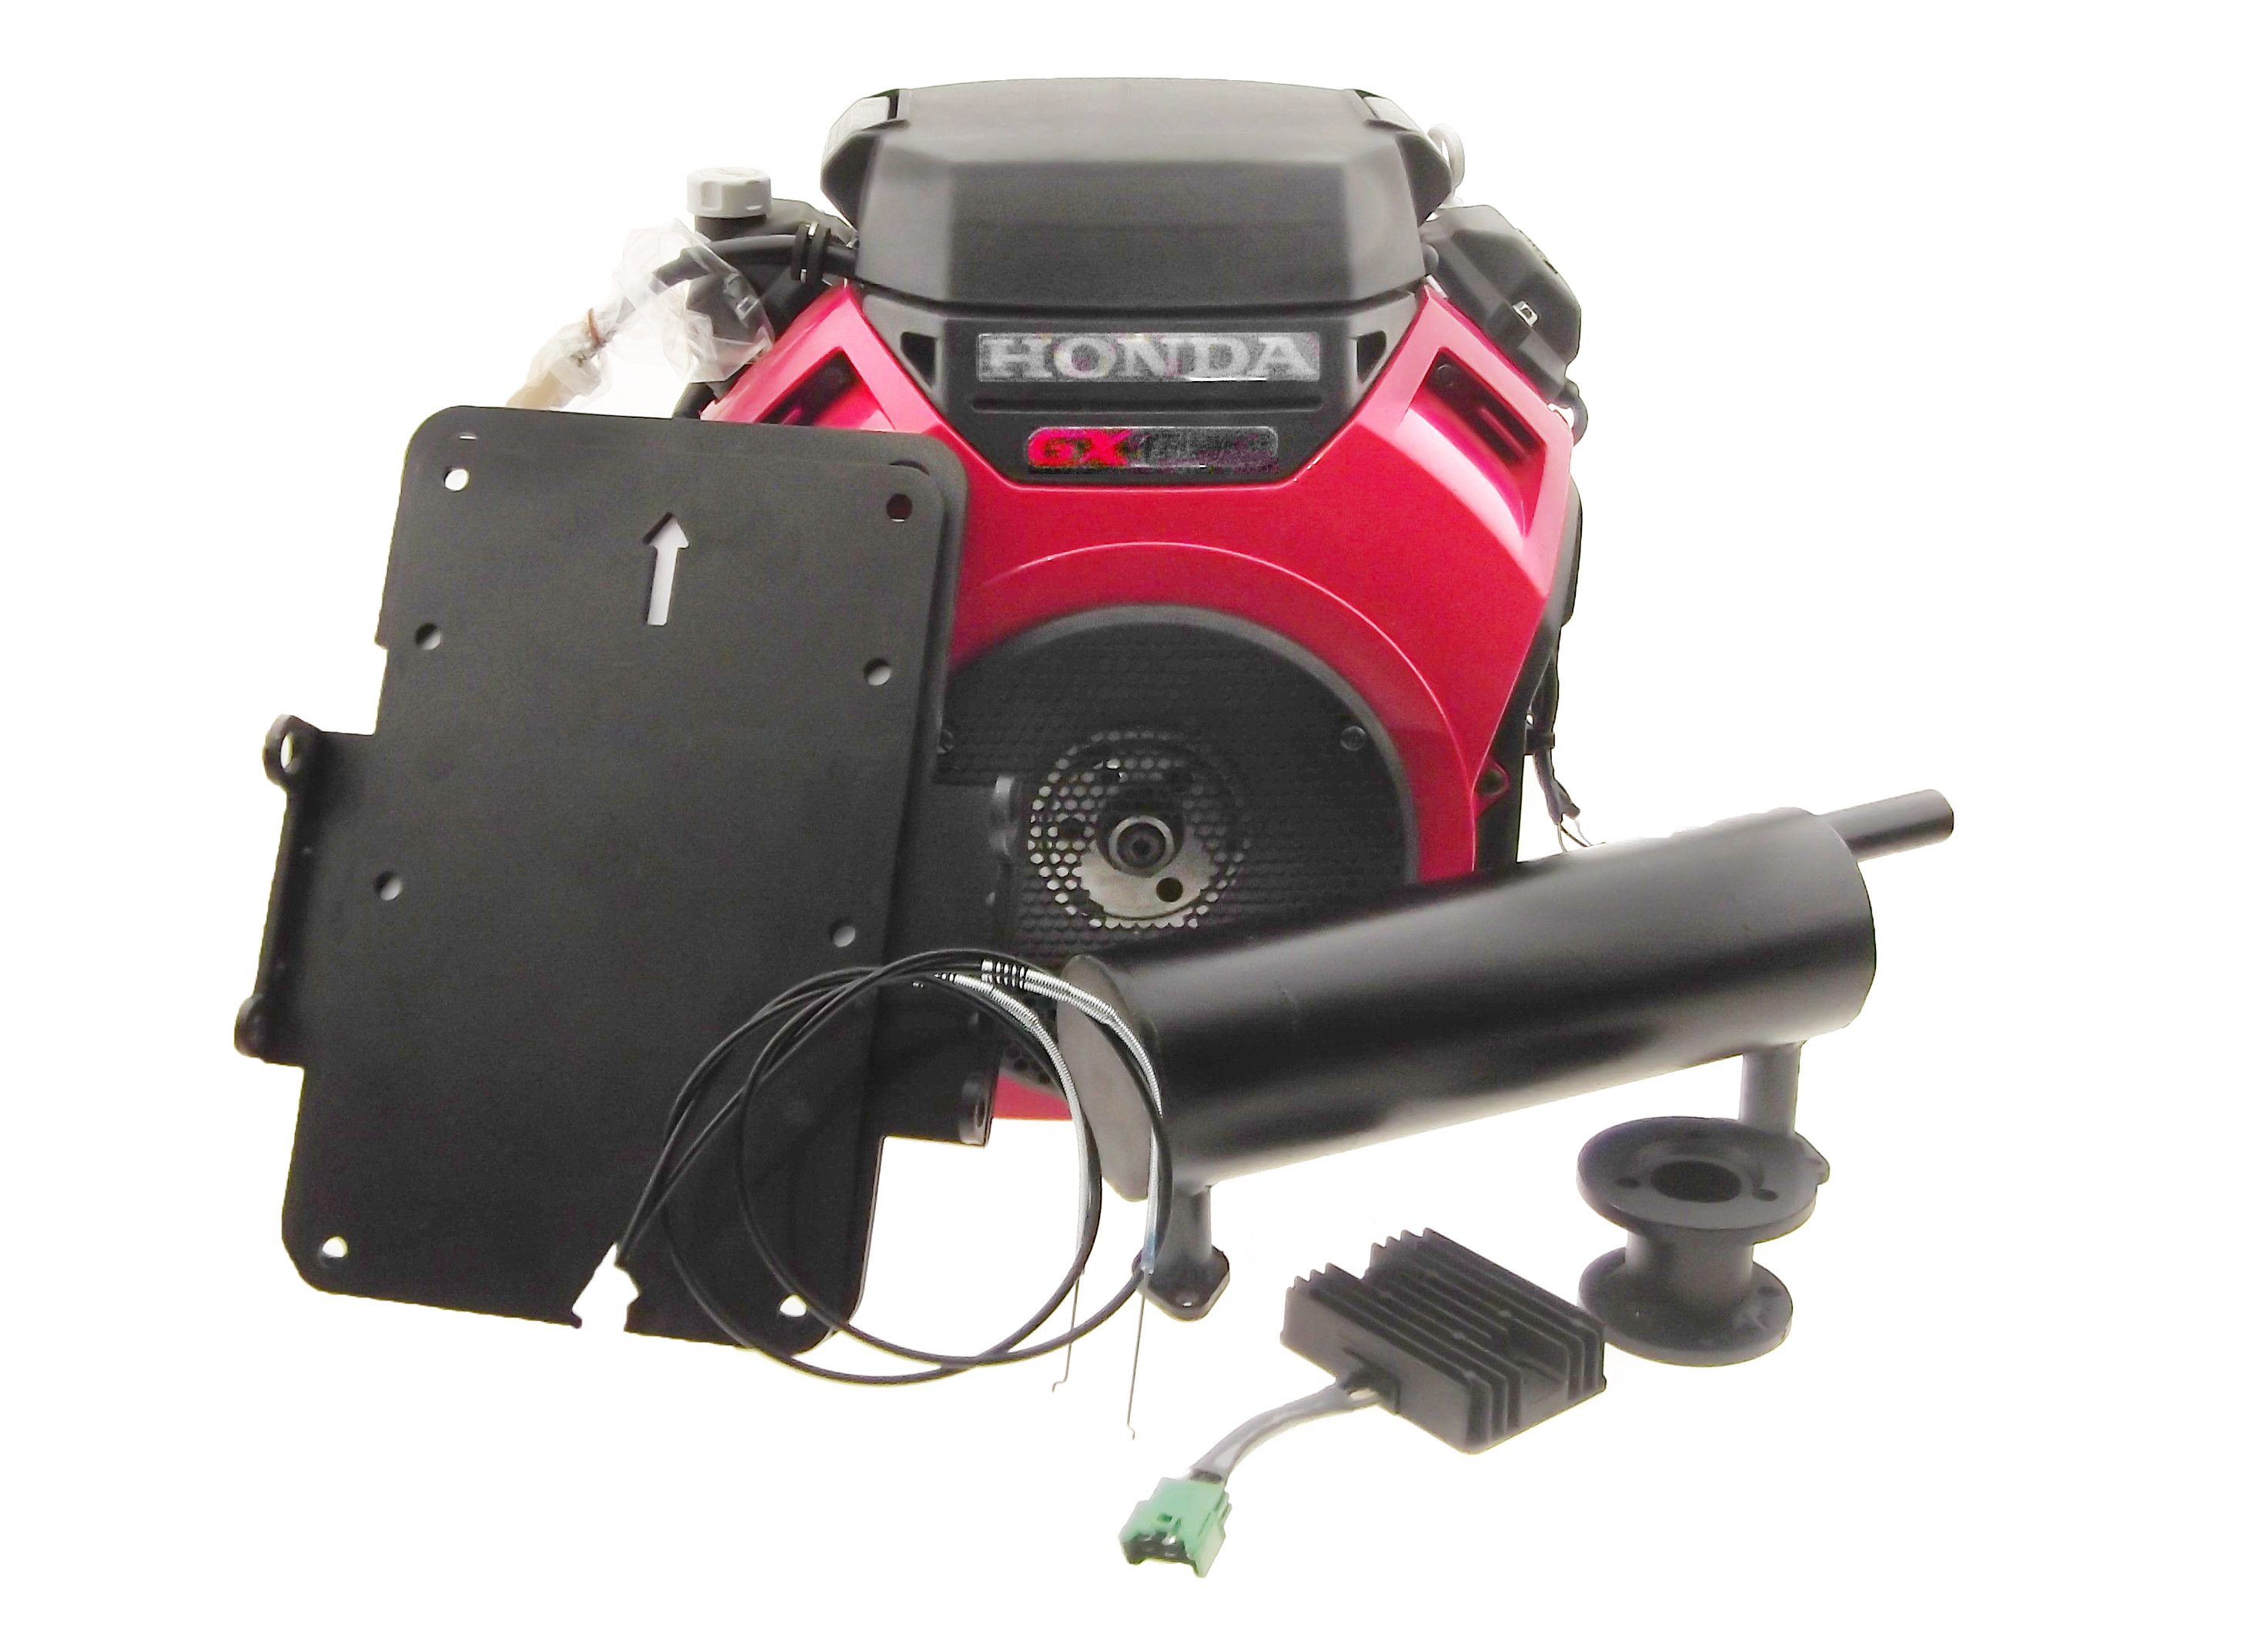 Honda Repower Engine Kit For John Deere 420 T H E Company